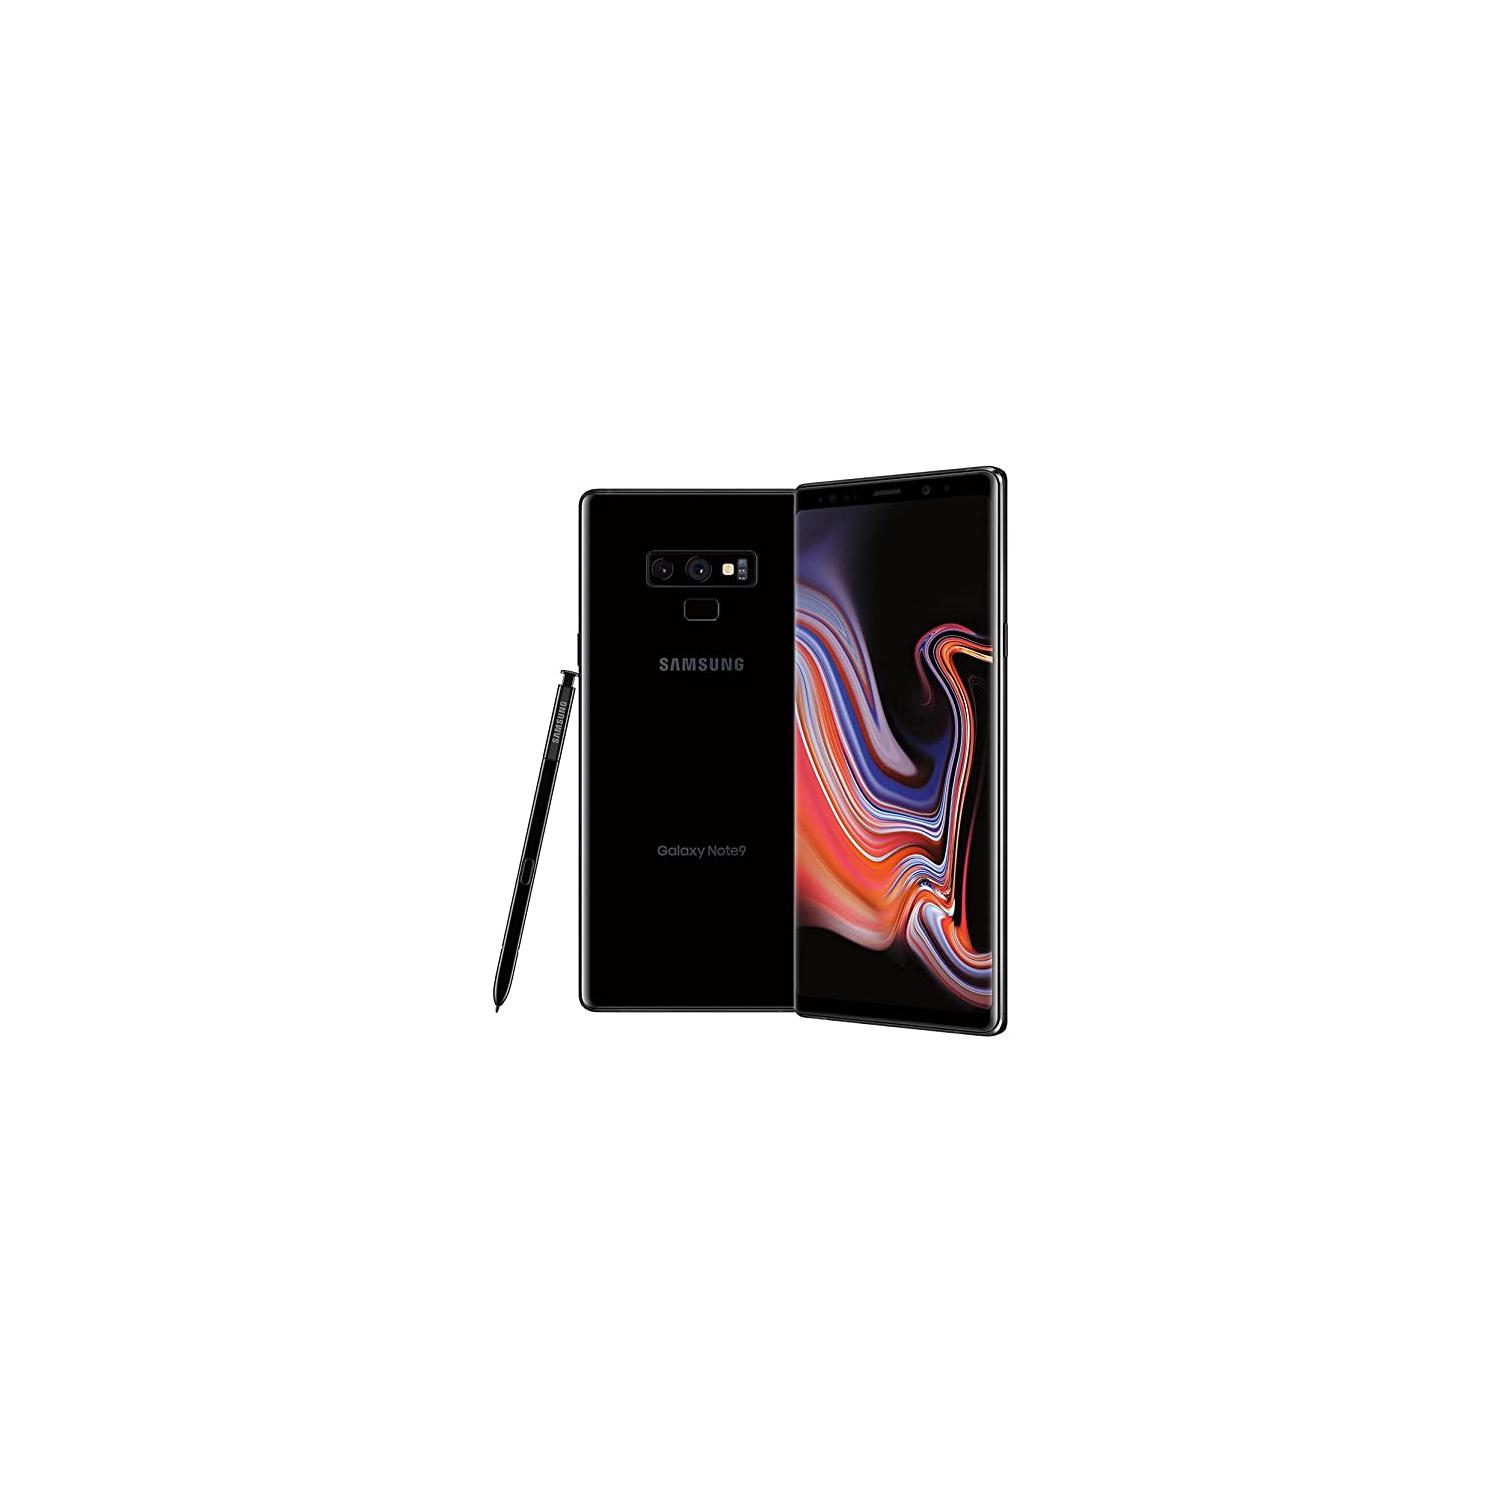 Samsung - Galaxy Note 9 - 4G LTE - 6.4” Super AMOLED - 128GB/ 6GB - N960U - Smartphone - Factory Unlocked - Midnight Black - Open Box